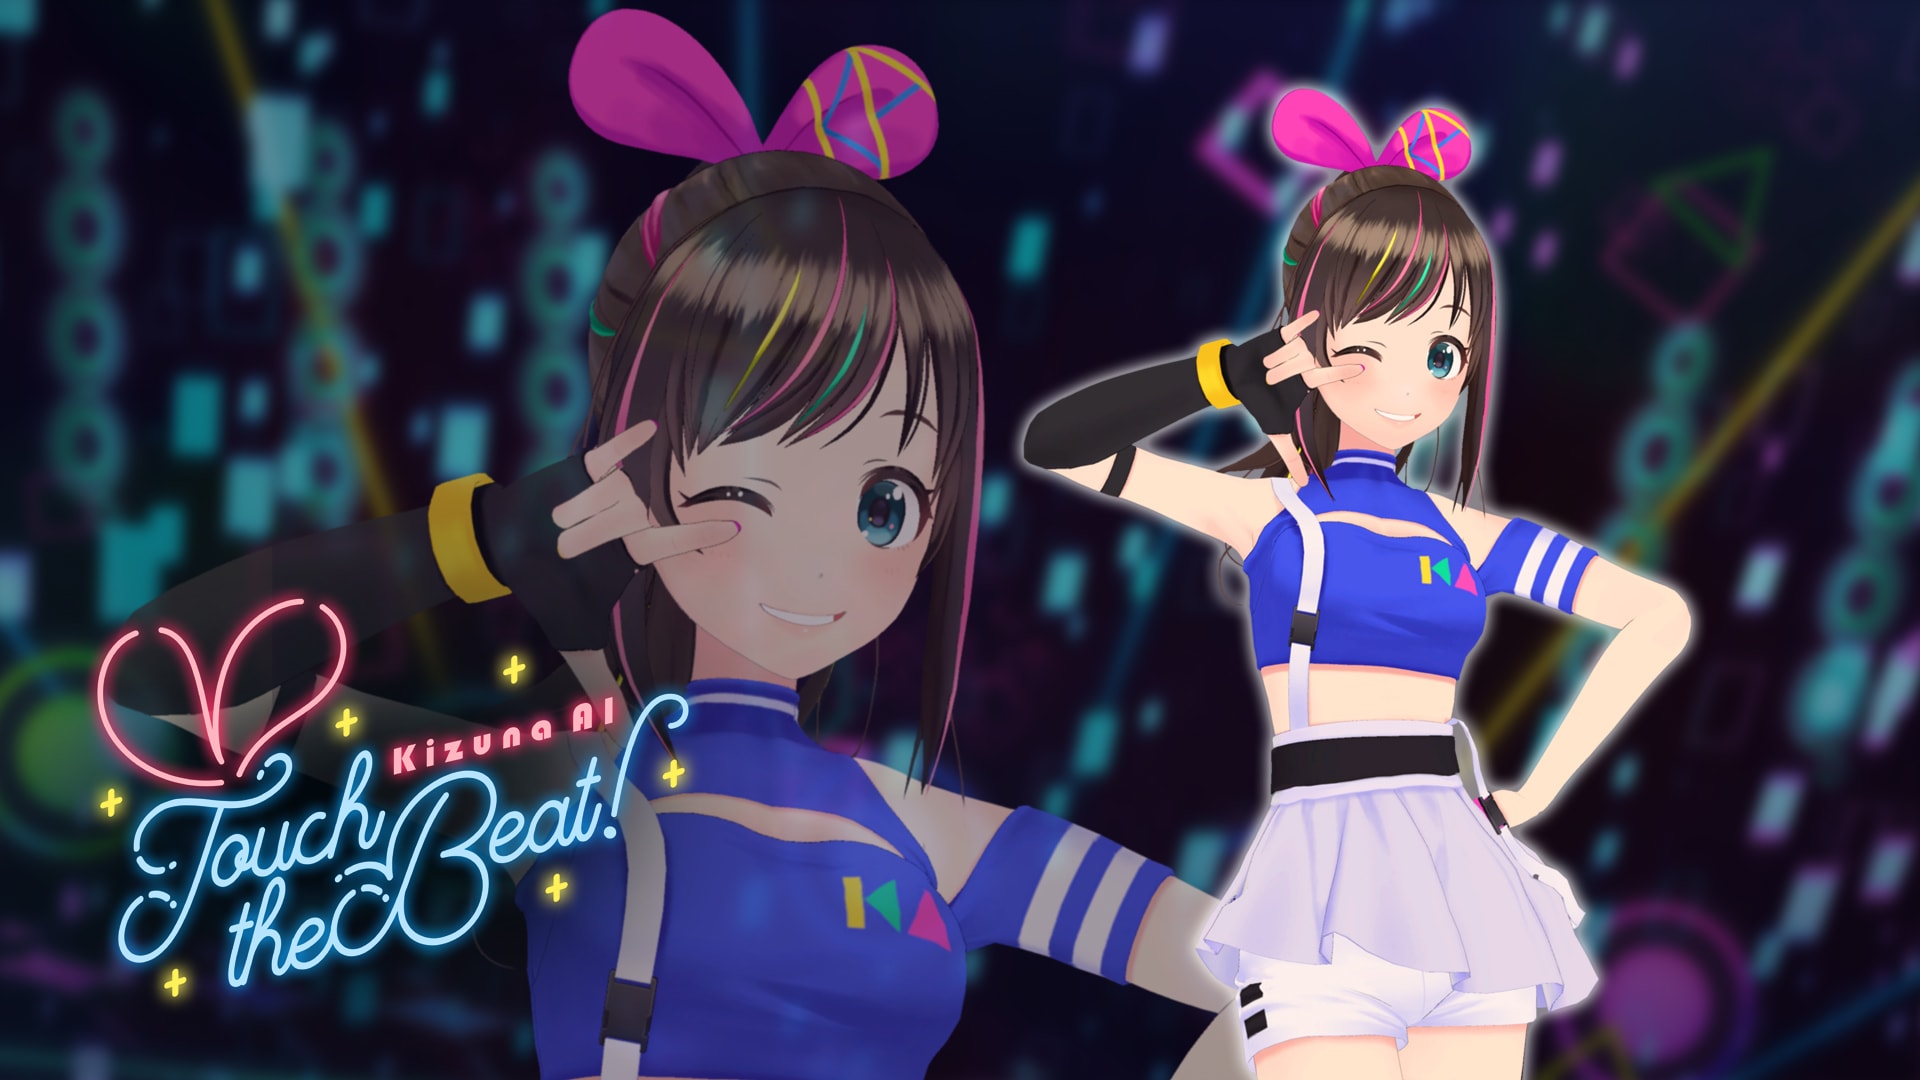 Costume supplémentaire 1 pour Kizuna AI - Touch the Beat! : « hello, world 2020 »